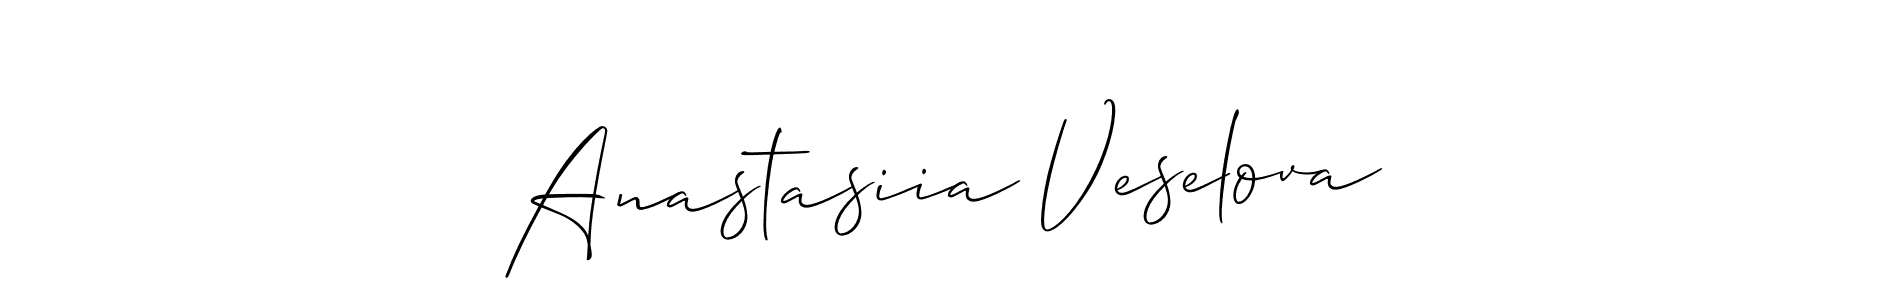 How to Draw Anastasiia Veselova signature style? Allison_Script is a latest design signature styles for name Anastasiia Veselova. Anastasiia Veselova signature style 2 images and pictures png